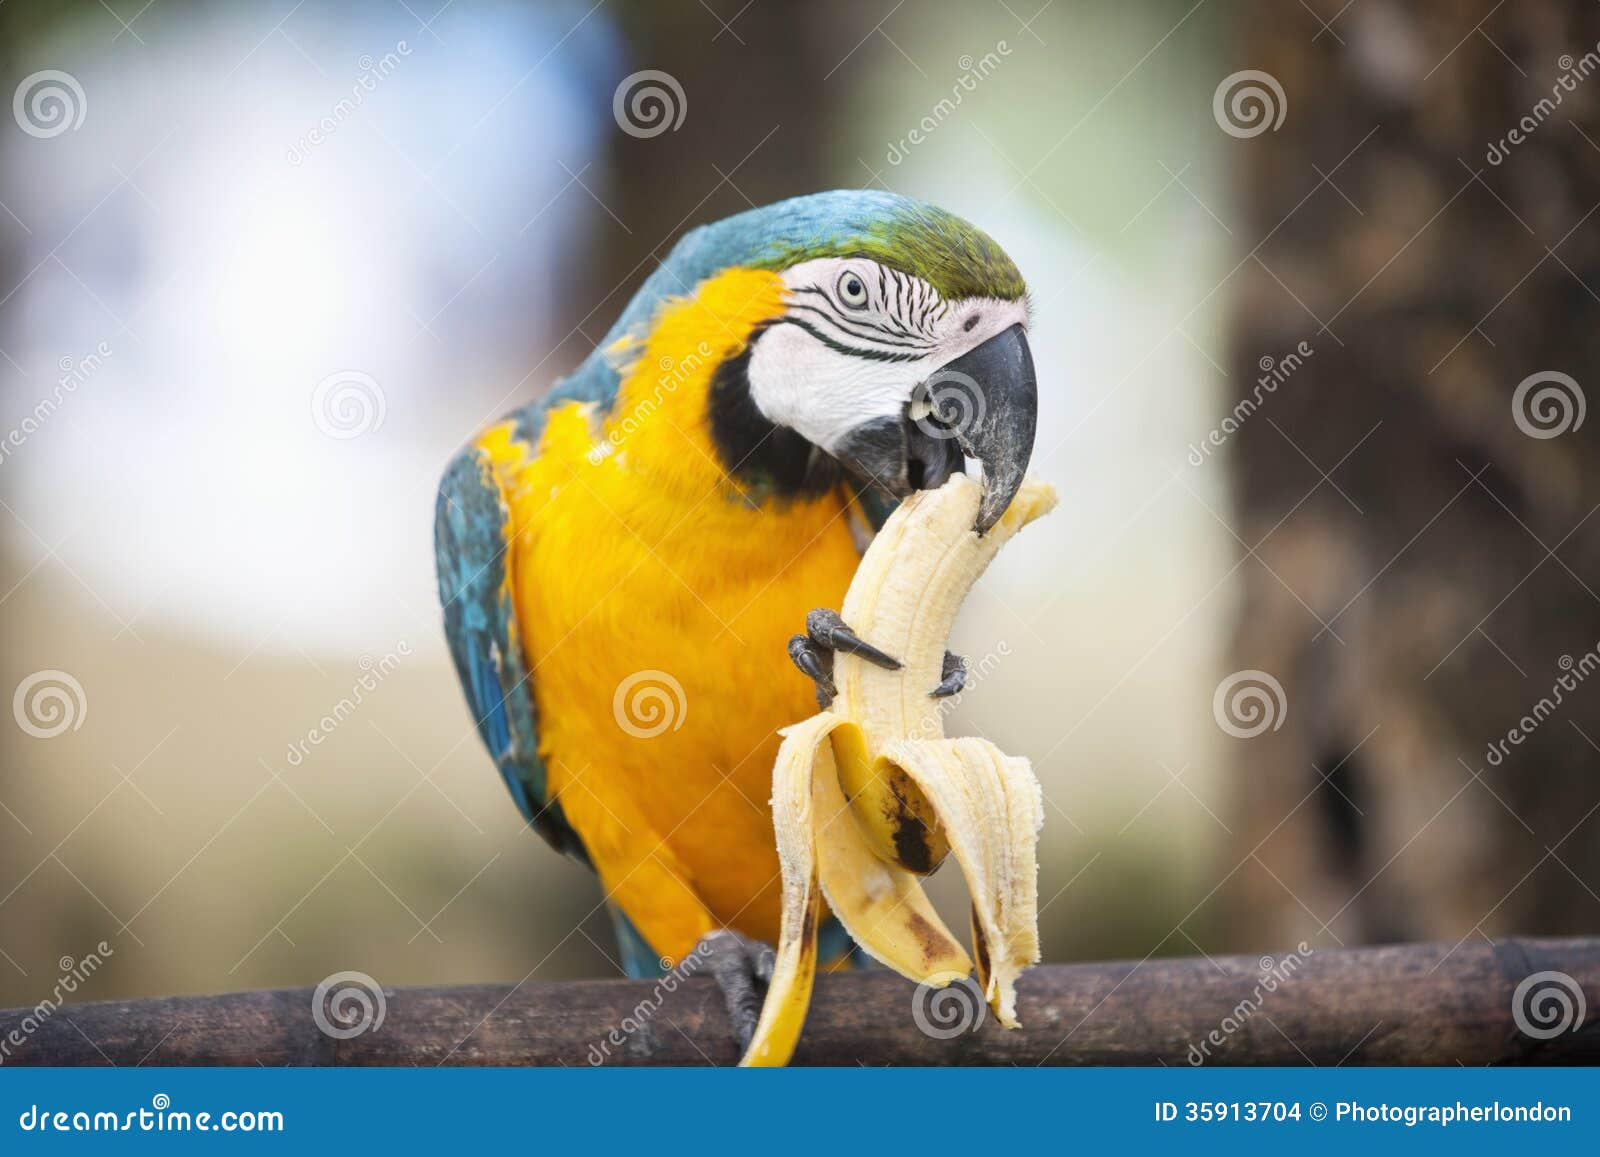 blue and yellow macaw eating banana, boracay, philippines